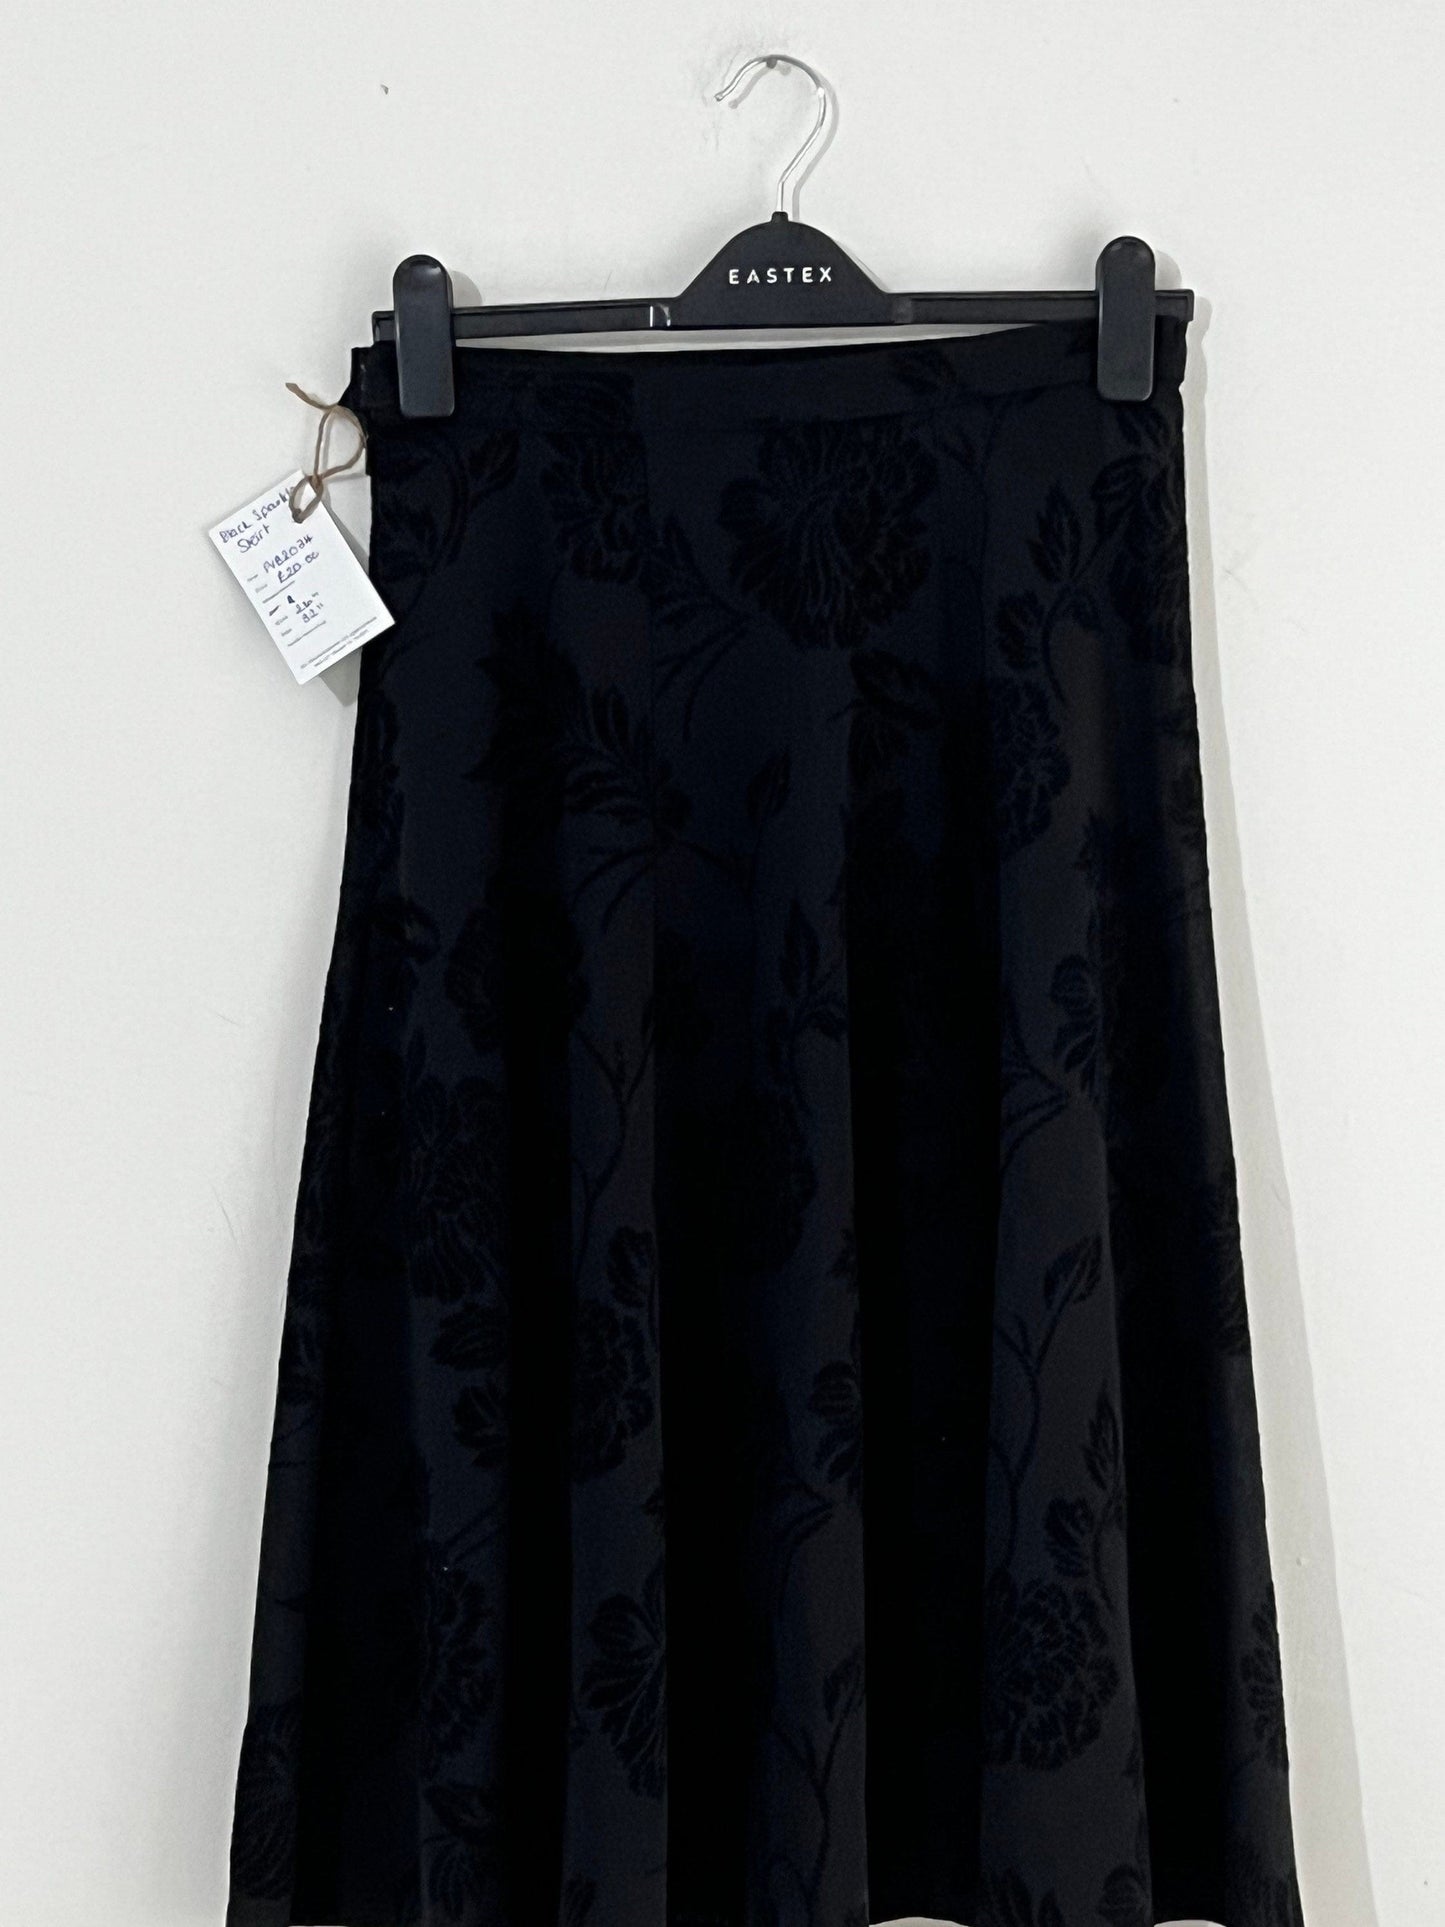 Vintage Swing skirt Midi Length Black floral sparkle pattern skirt UK Size 8